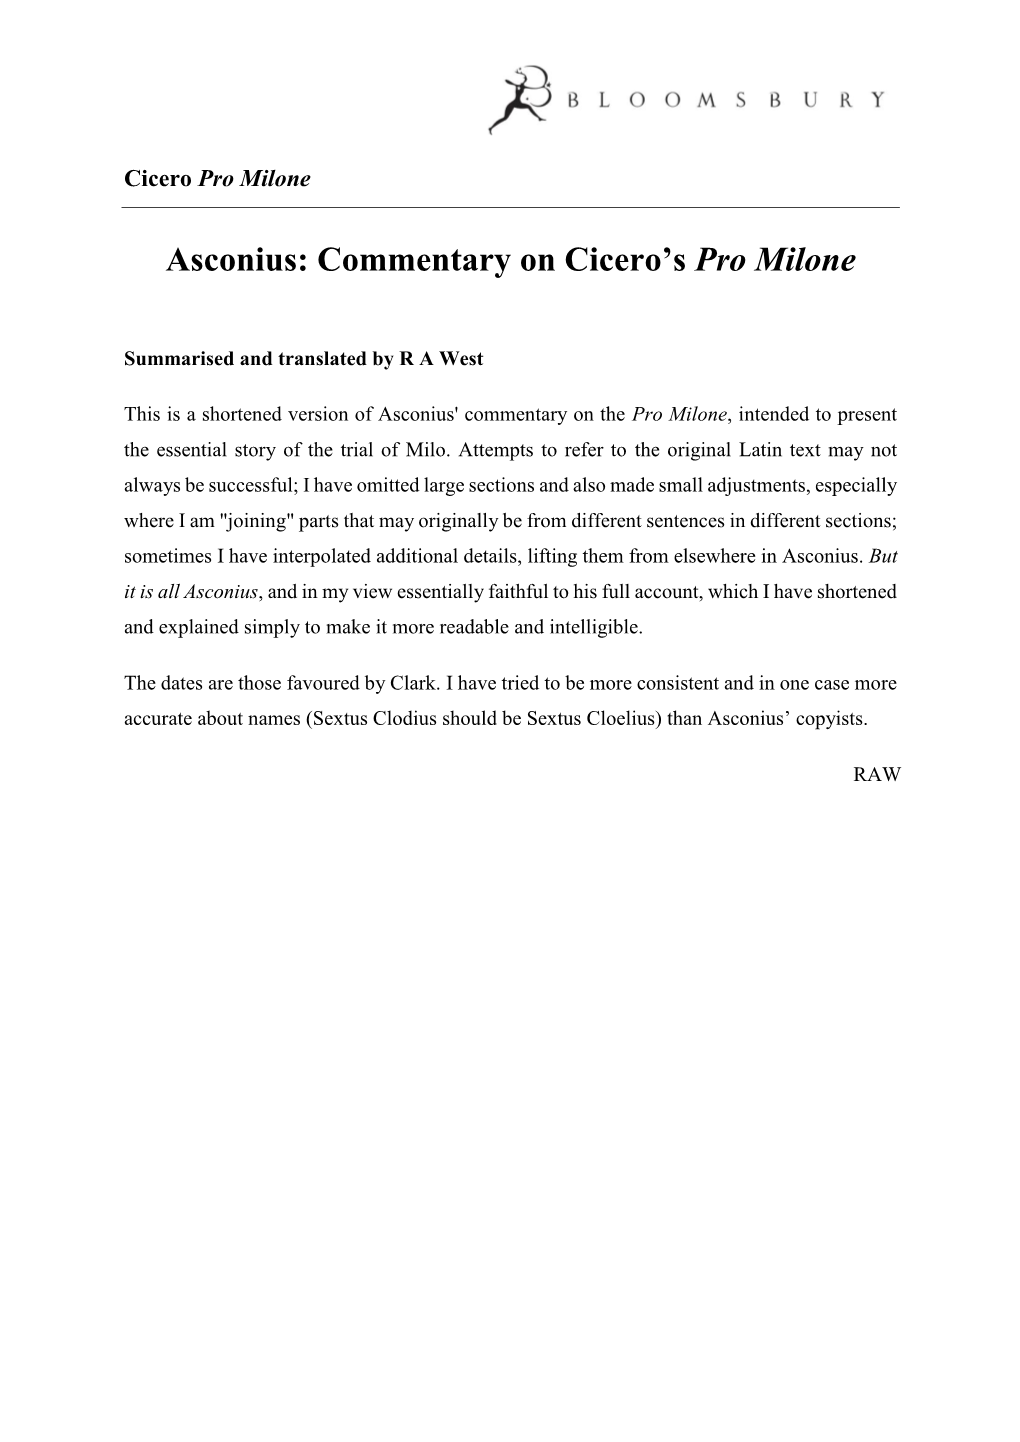 Asconius: Commentary on Cicero's Pro Milone